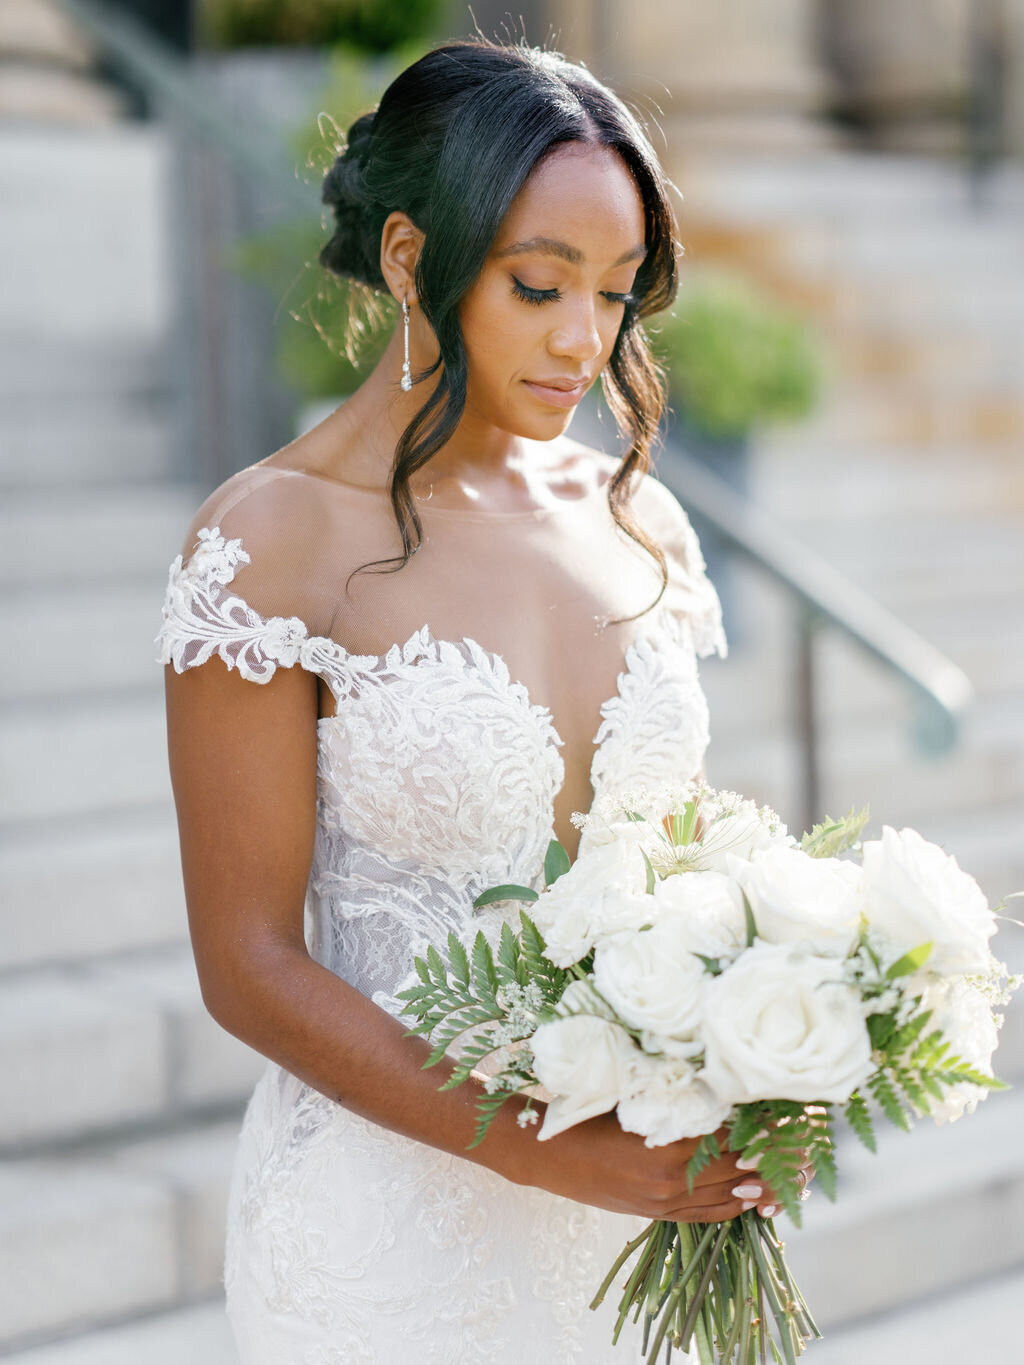 Jayne Heir Weddings and Events - Washington DC Metropolitan Area Wedding and Event Planner - Modern, Stylish, Custom, Top, Best Photo - 32